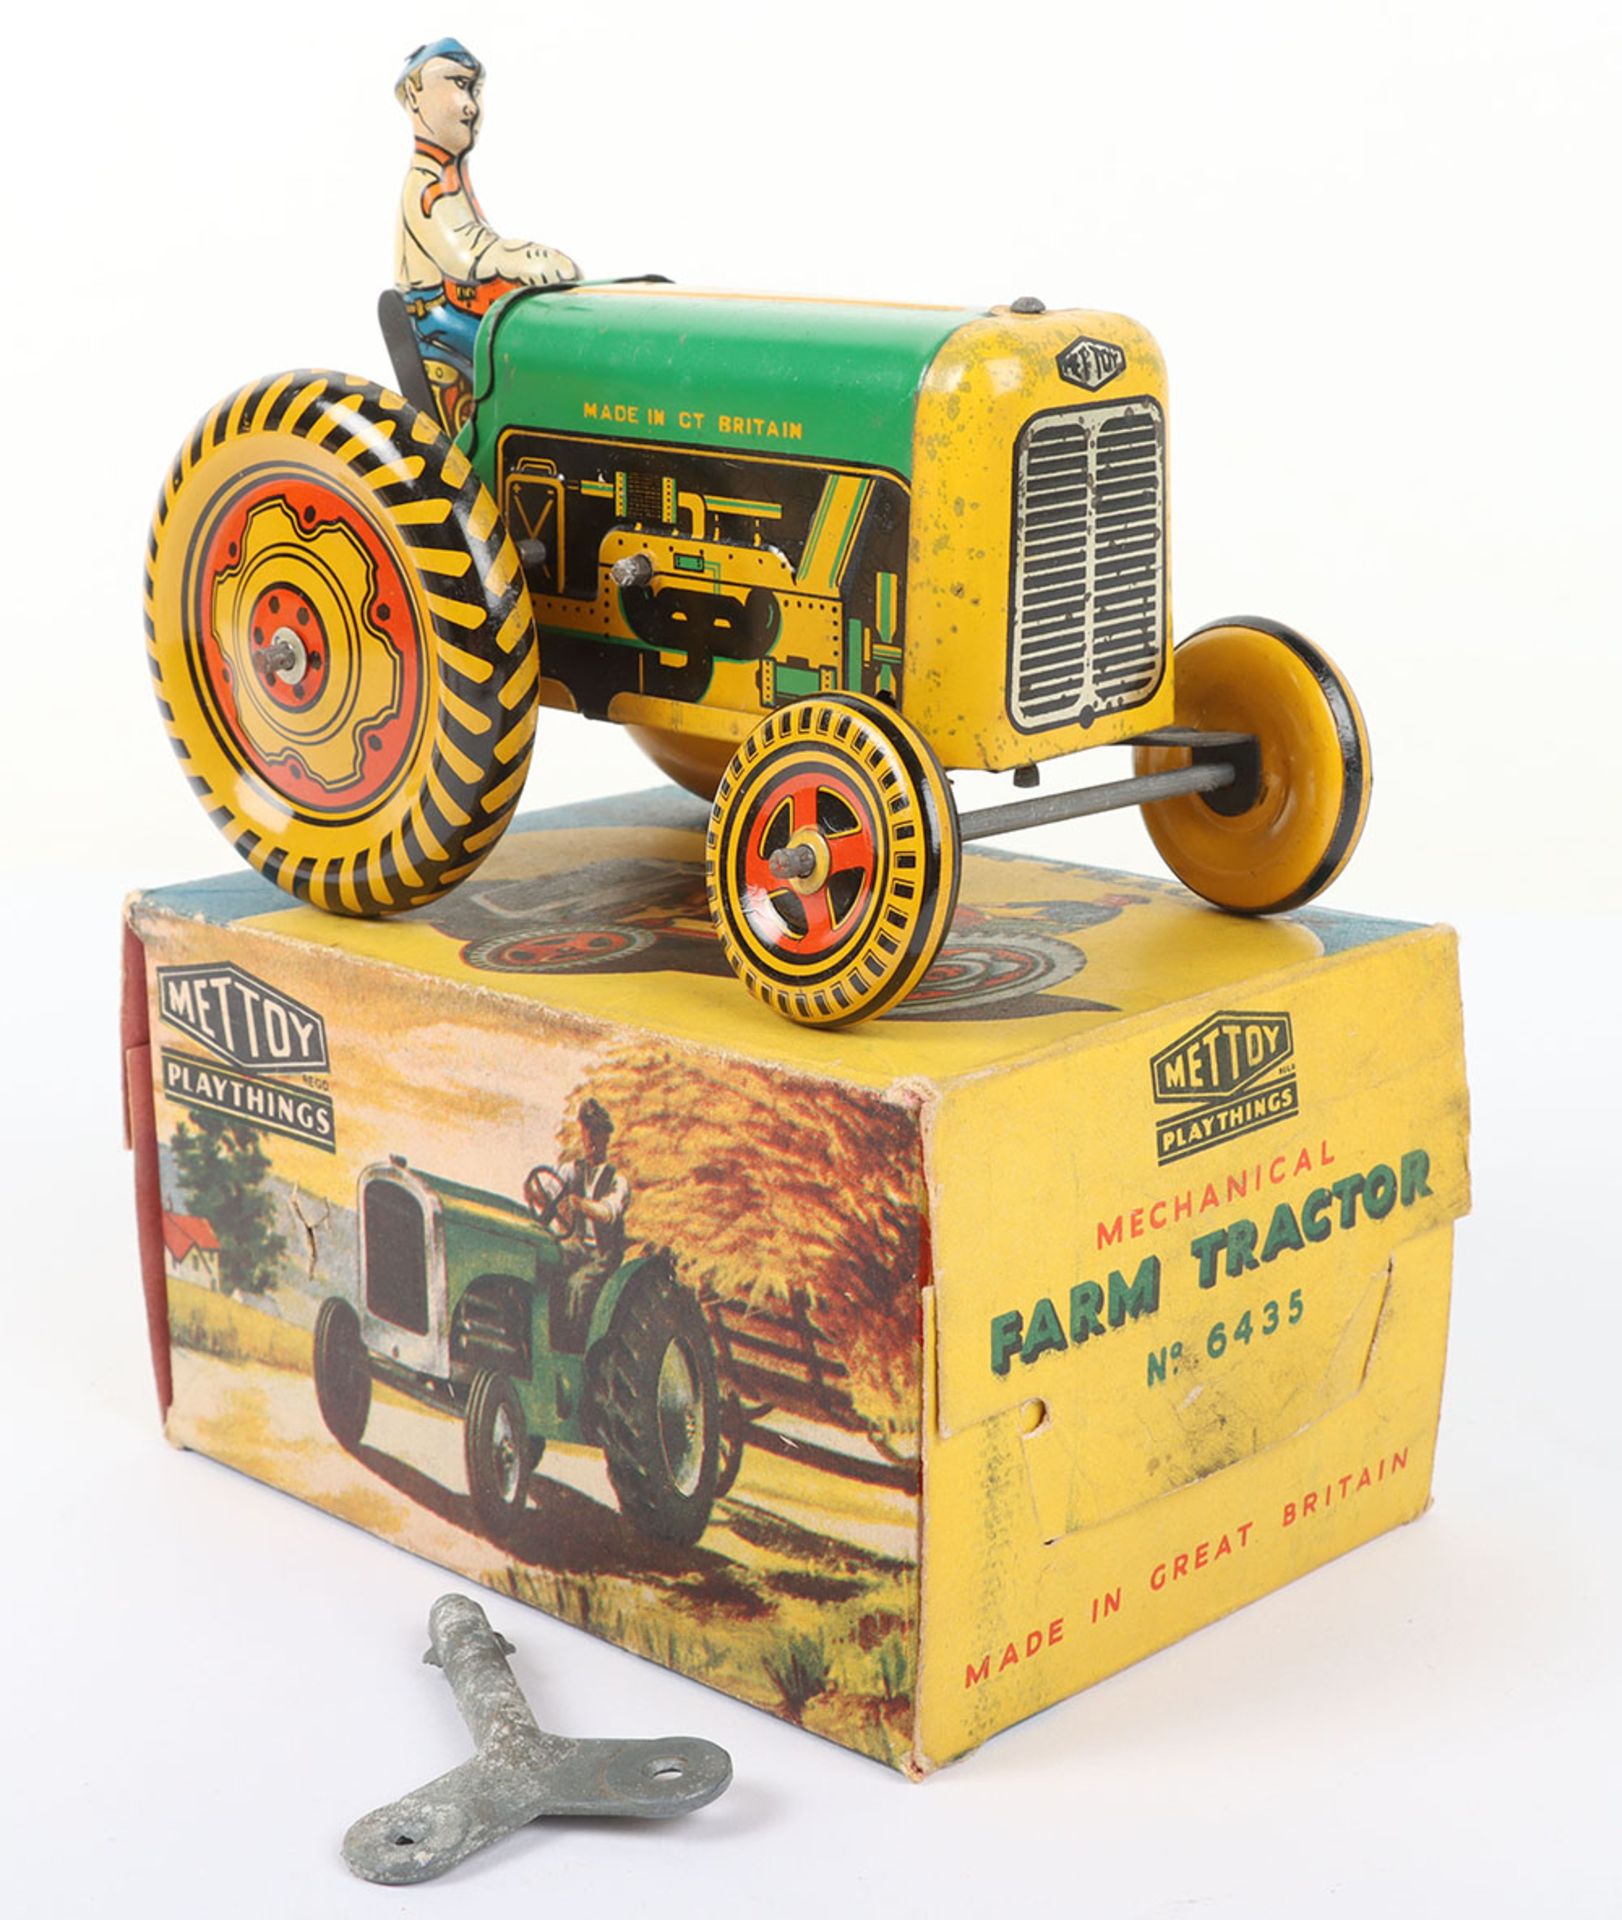 Mettoy Playthings Tinplate Mechanical Farm Tractor - Bild 2 aus 6